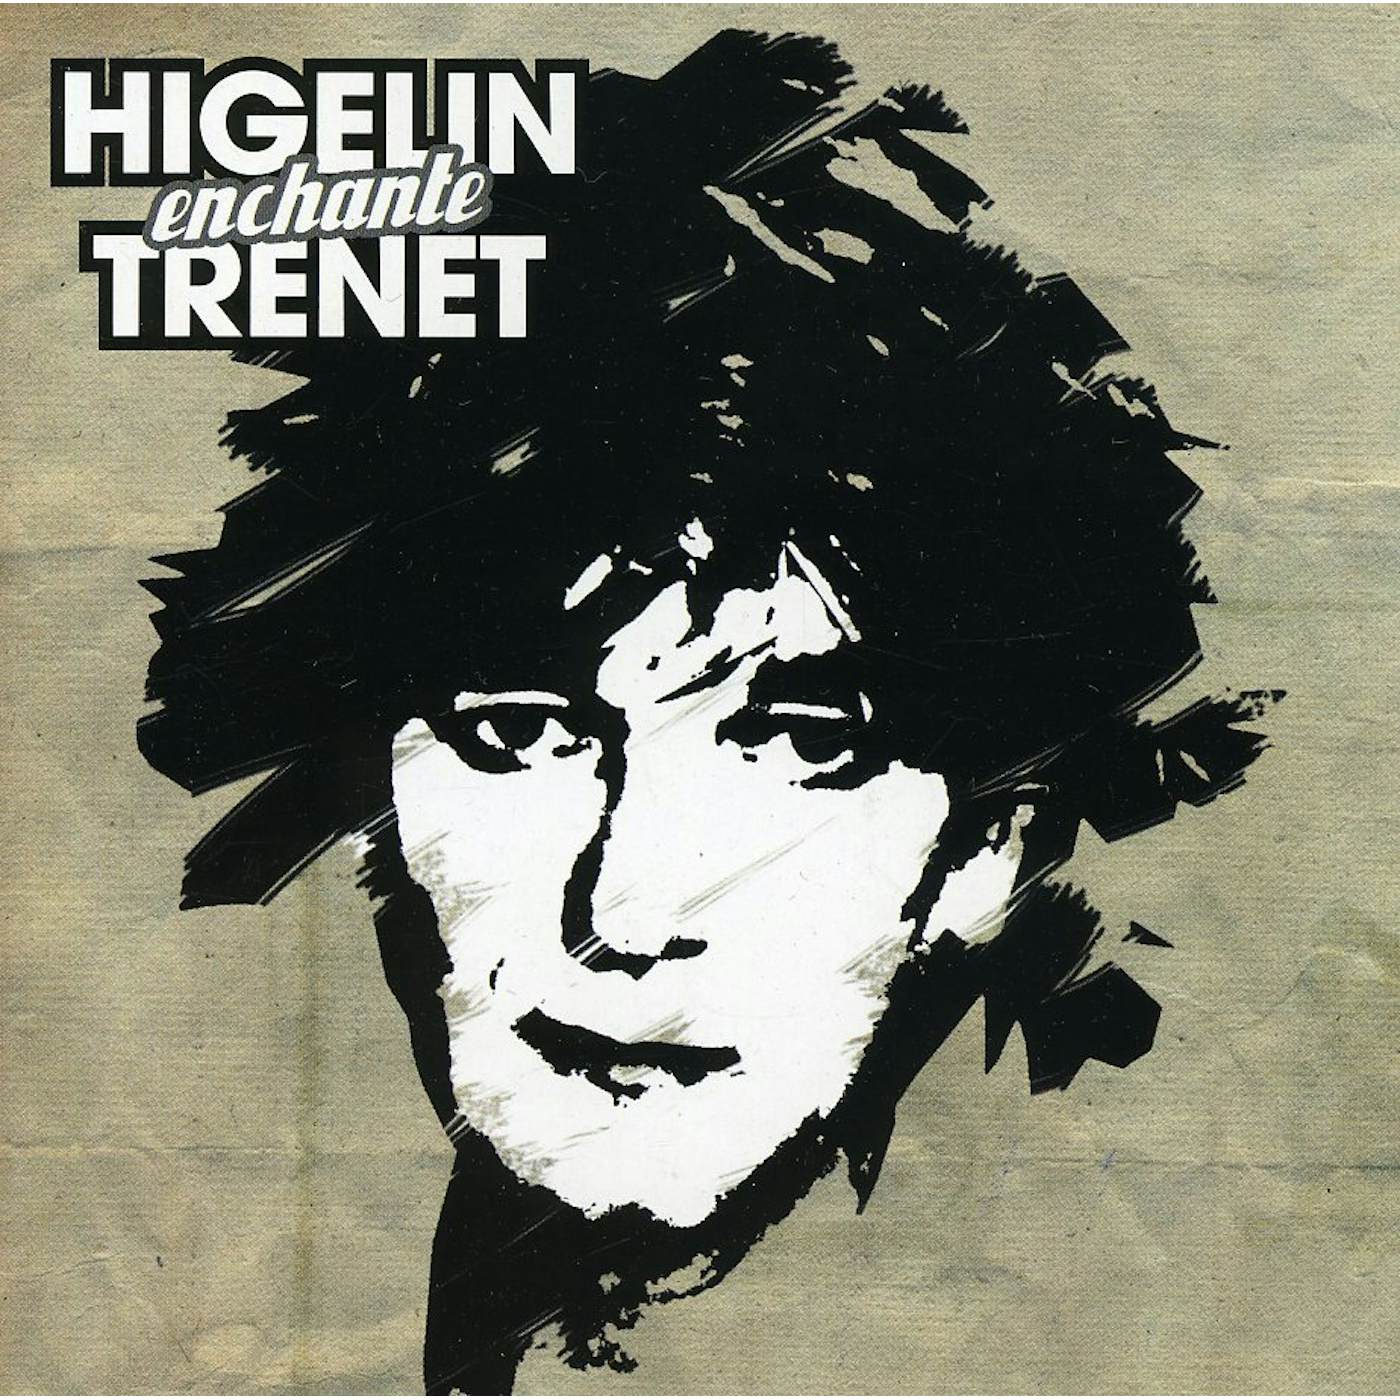 Jacques Higelin HIGELIN ENCHANTE TRENET CD